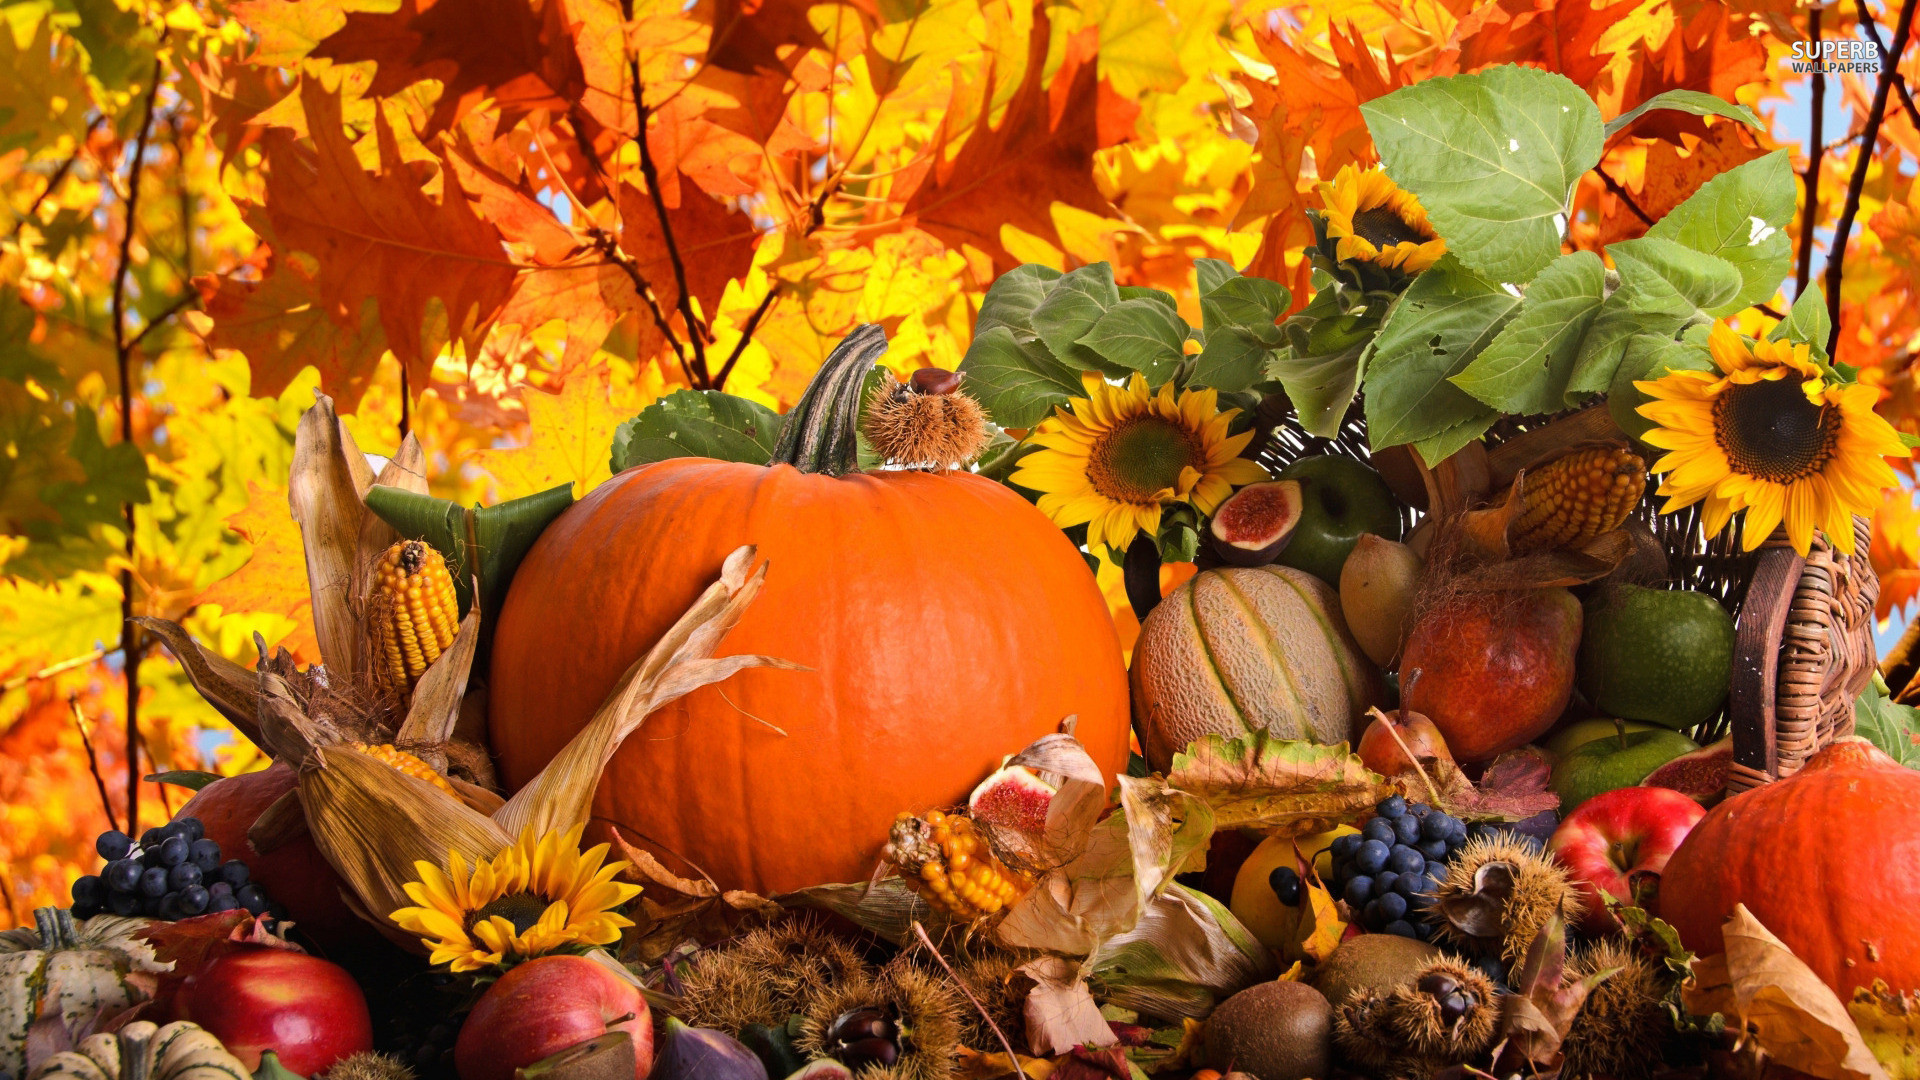 Fall Themed Desktop Background Wallpaper Adorable